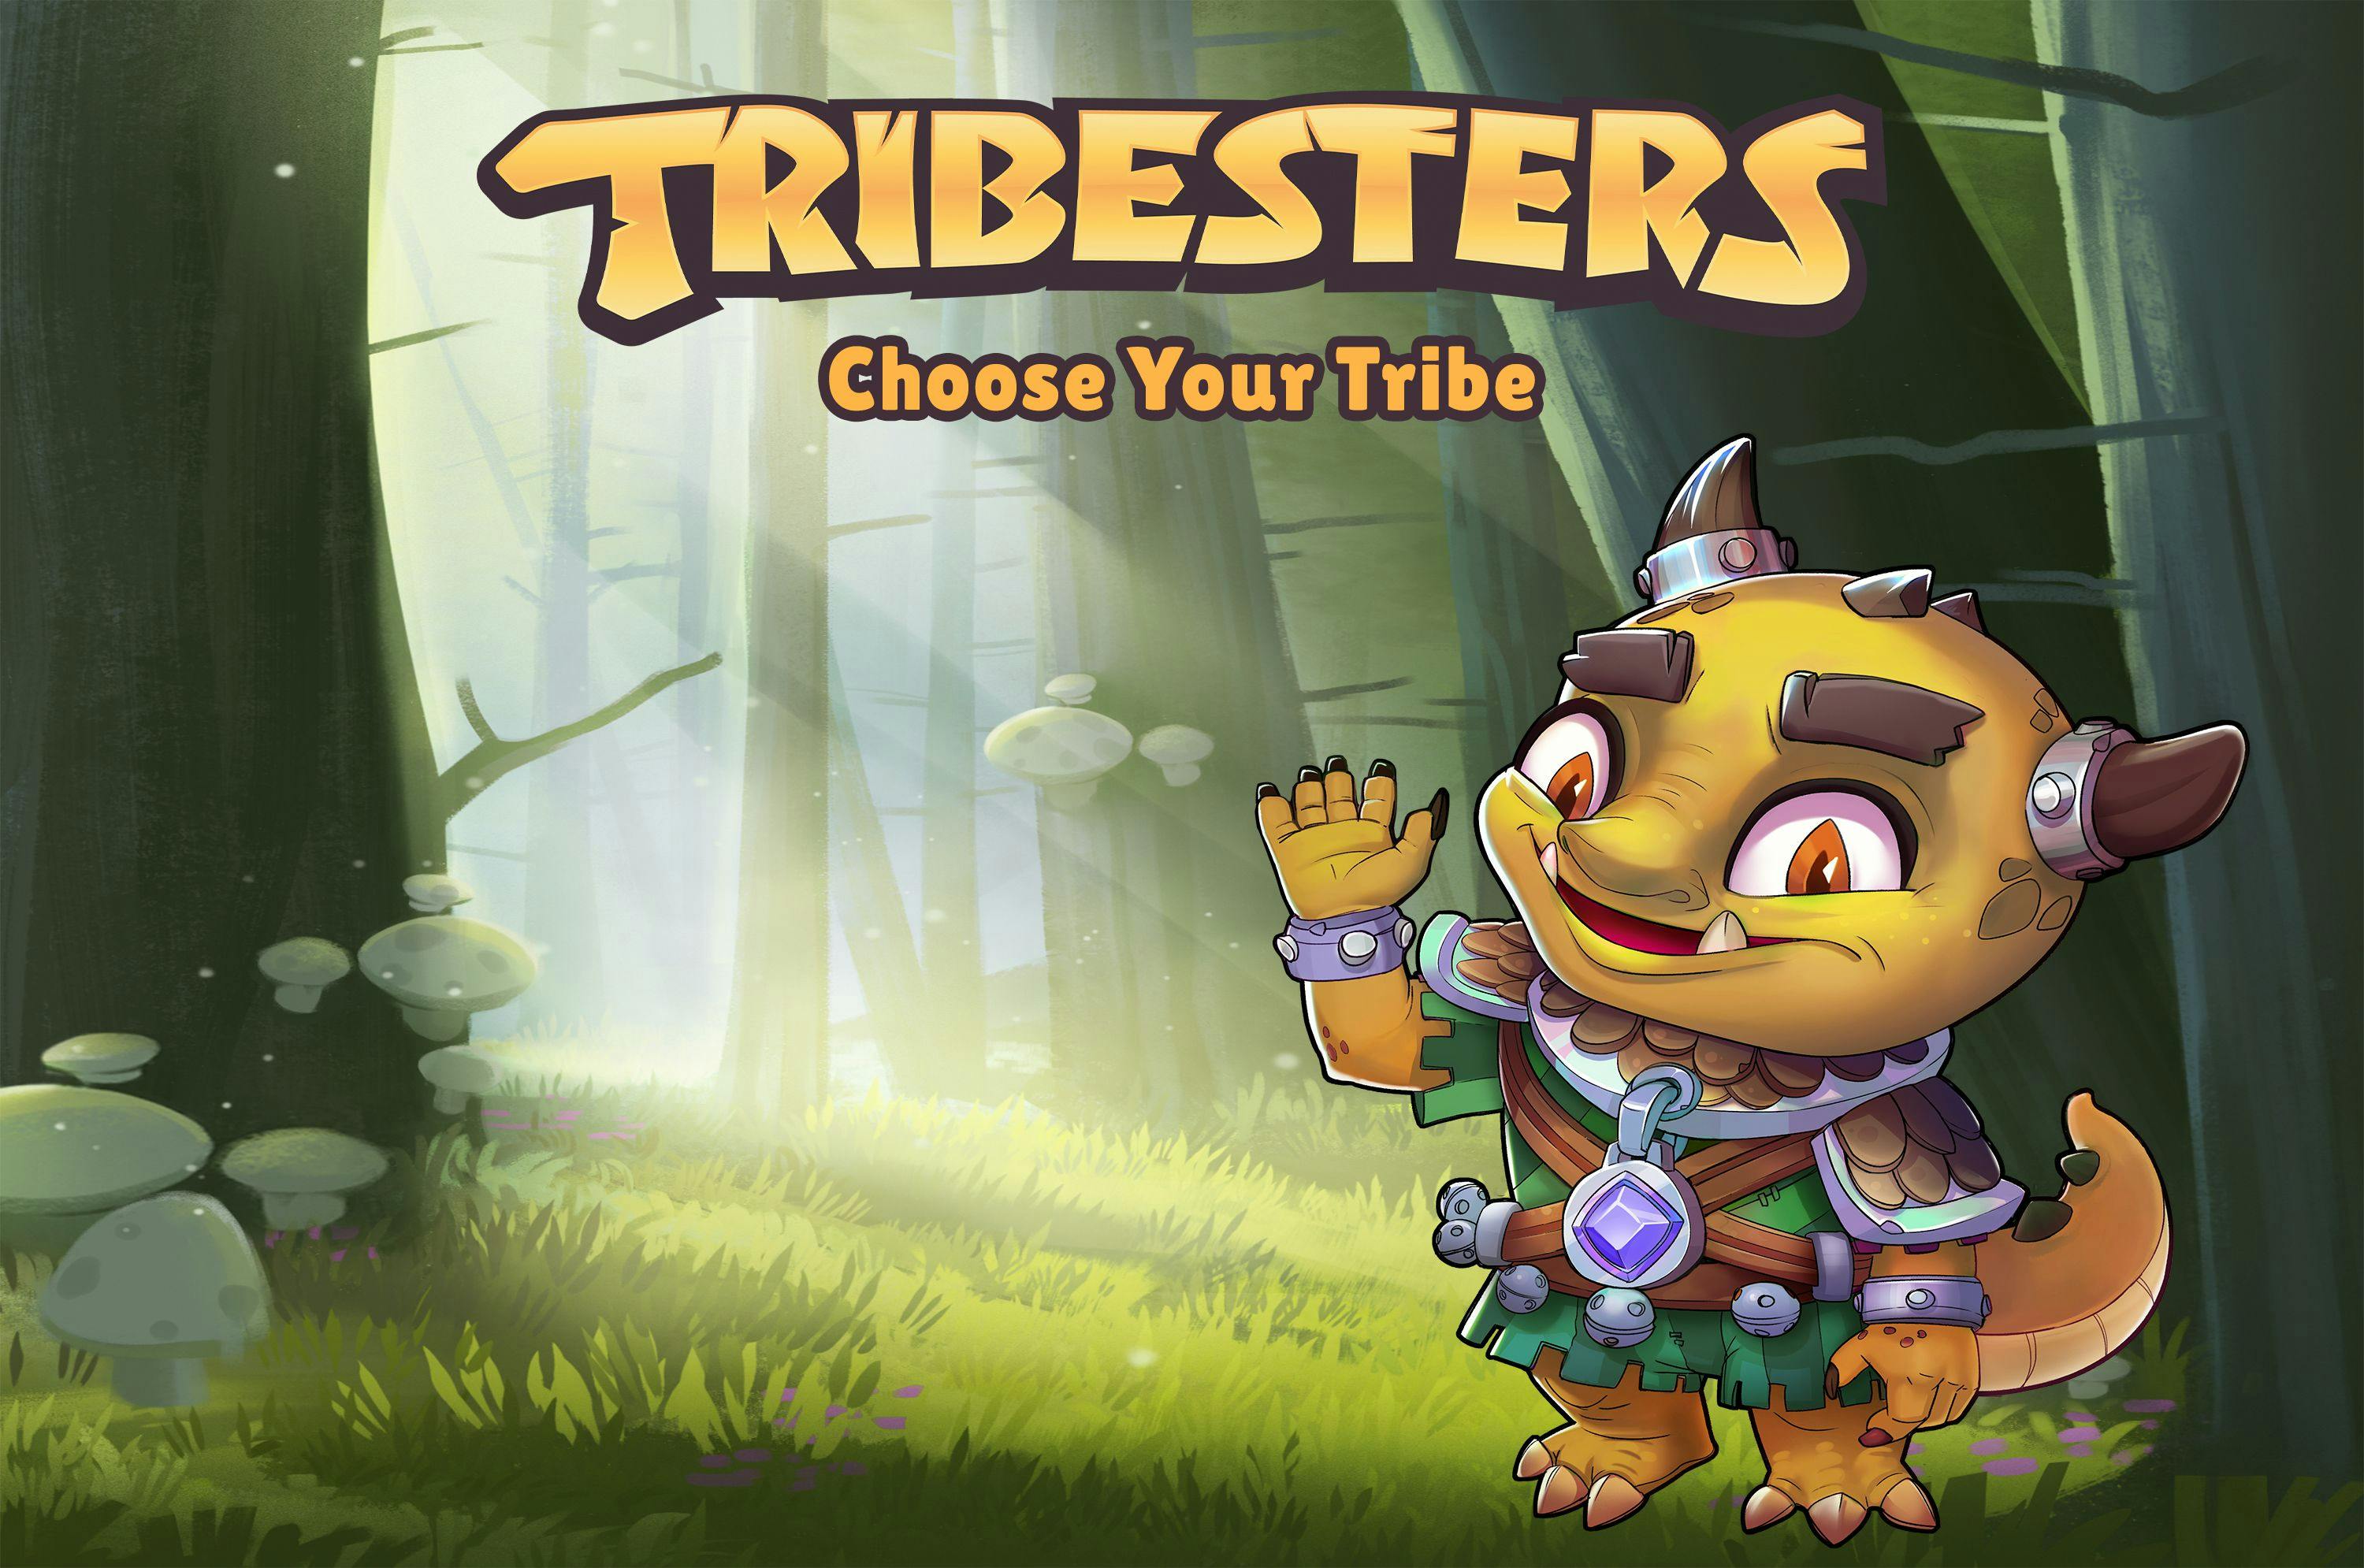 tribesters game image 1.jpg